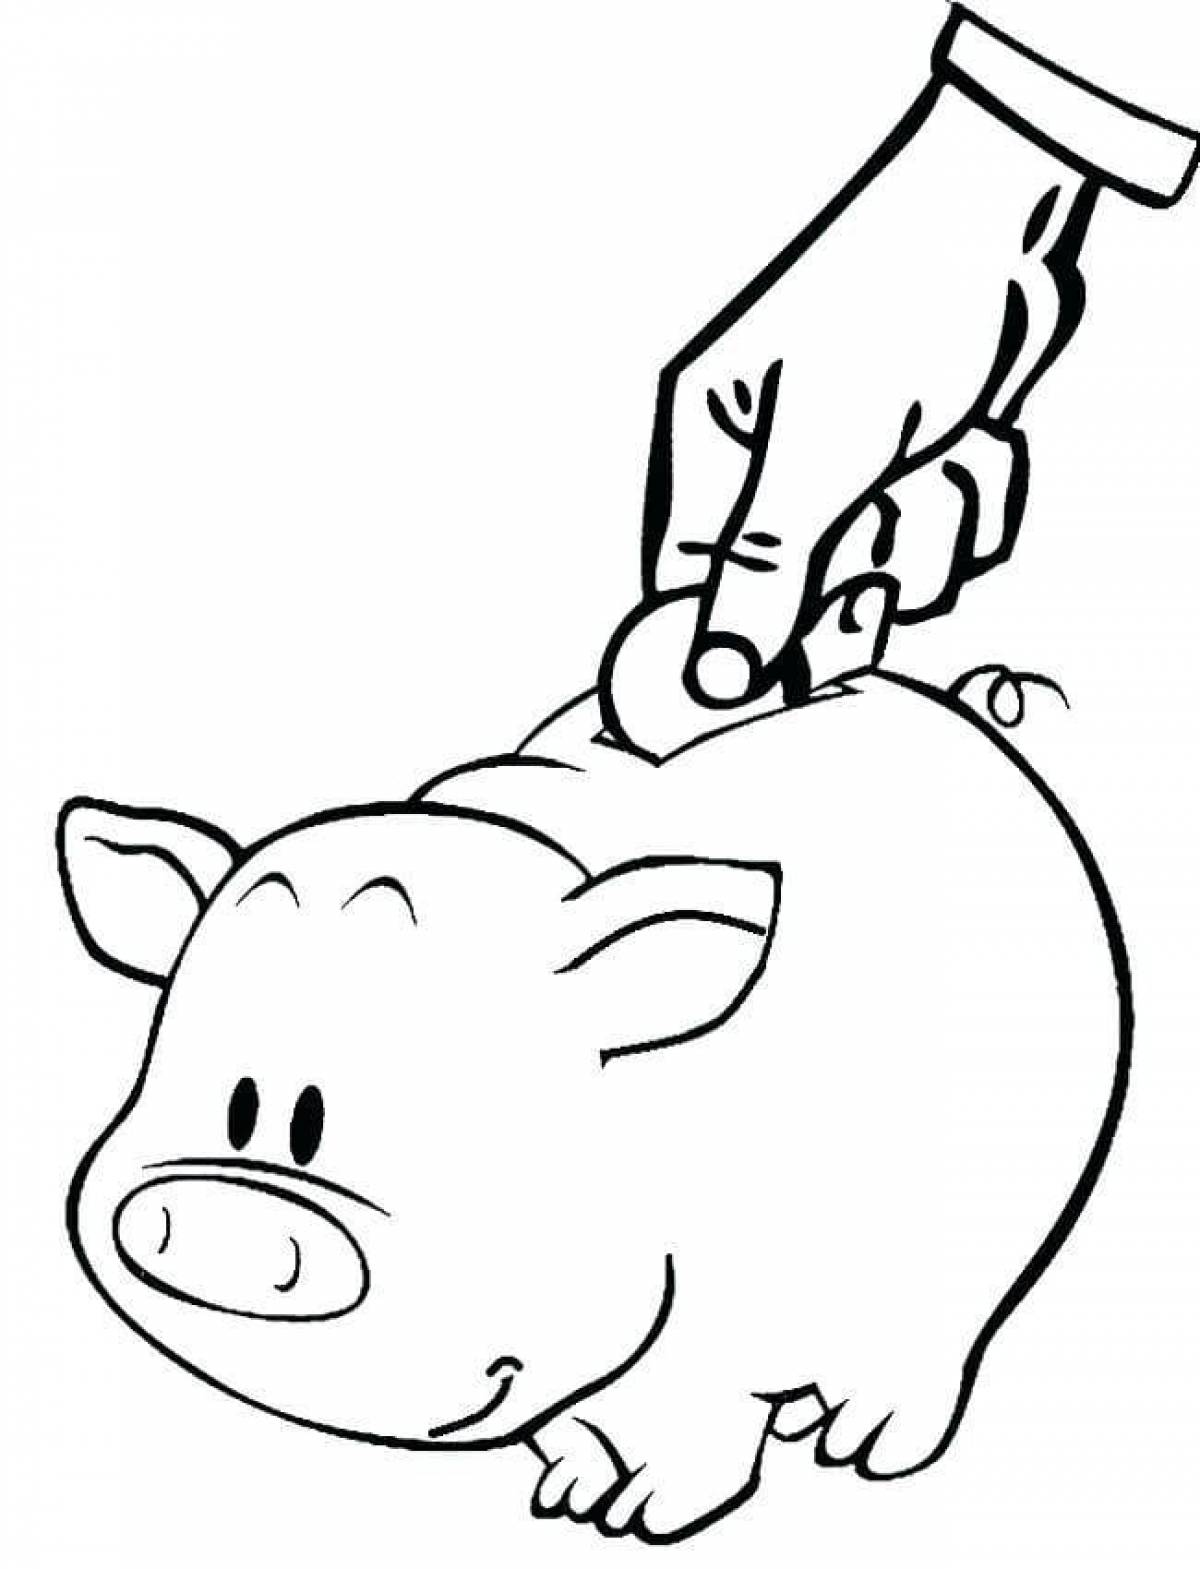 Crazy piggy bank coloring page